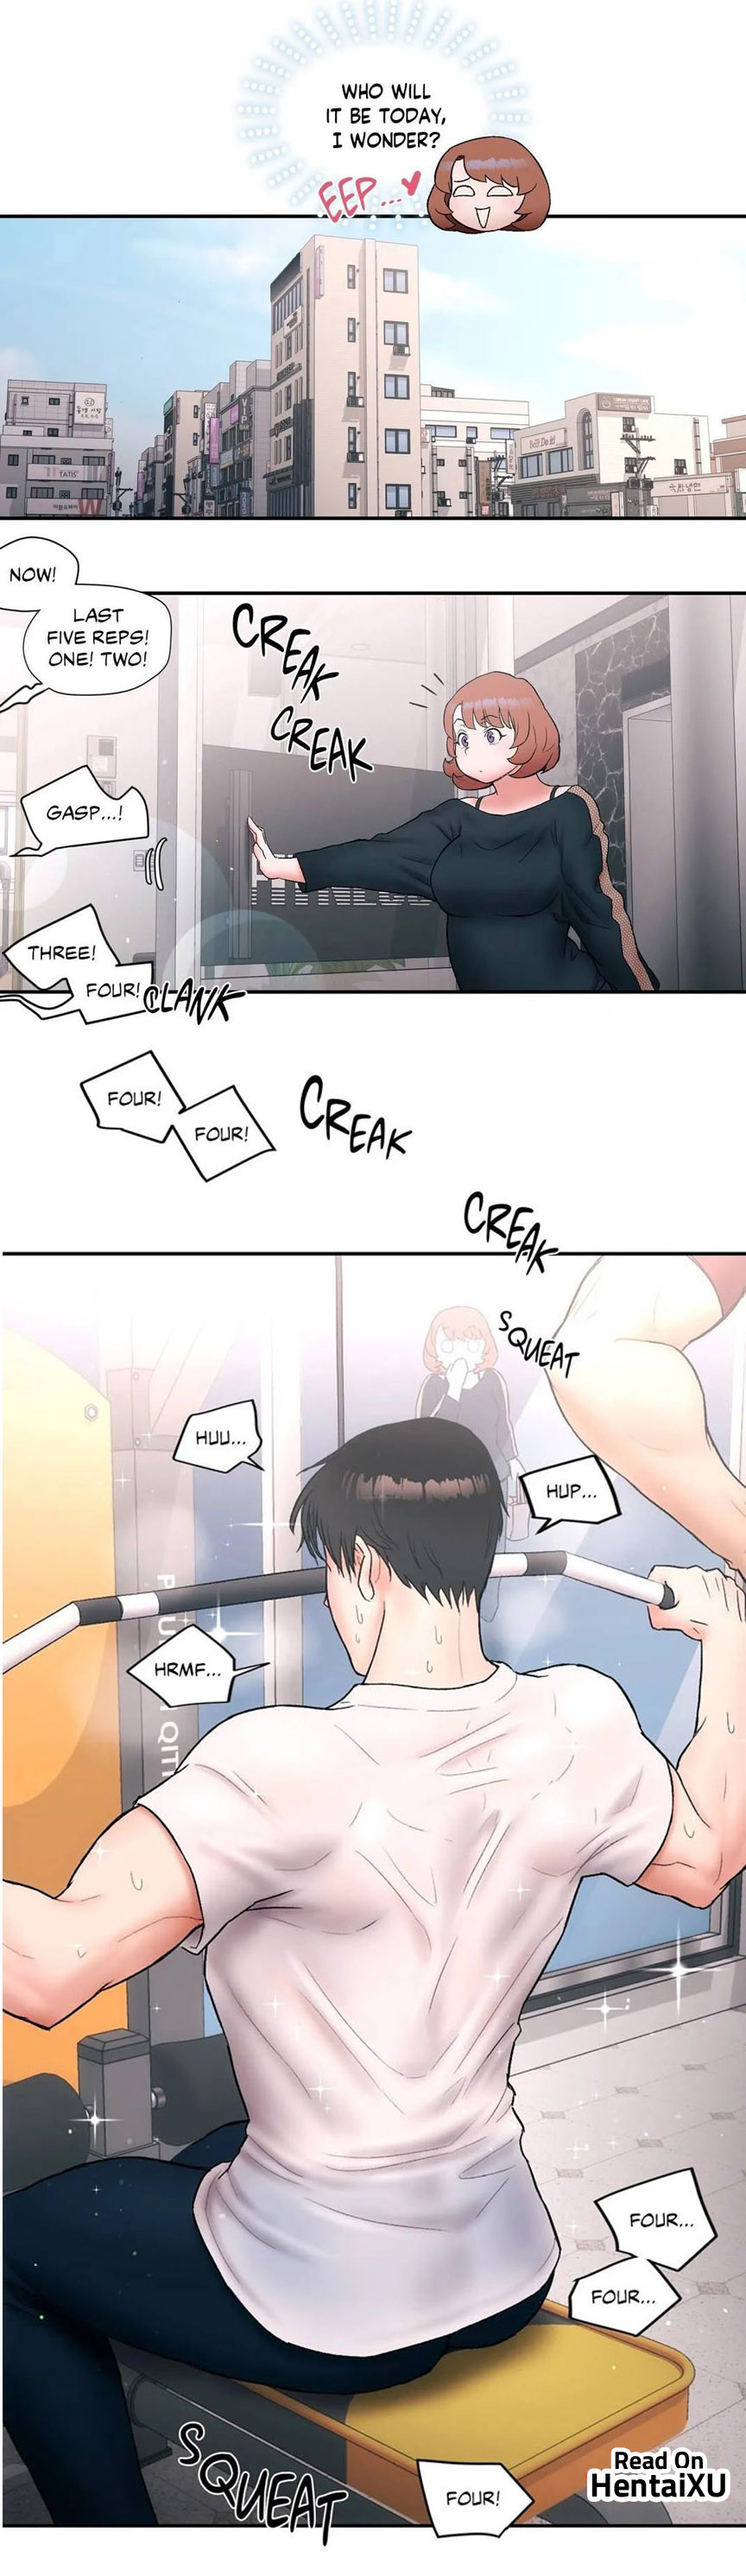 [Choe Namsae, Shuroop] Sexercise Ch.9/? [English] [Hentai Universe]